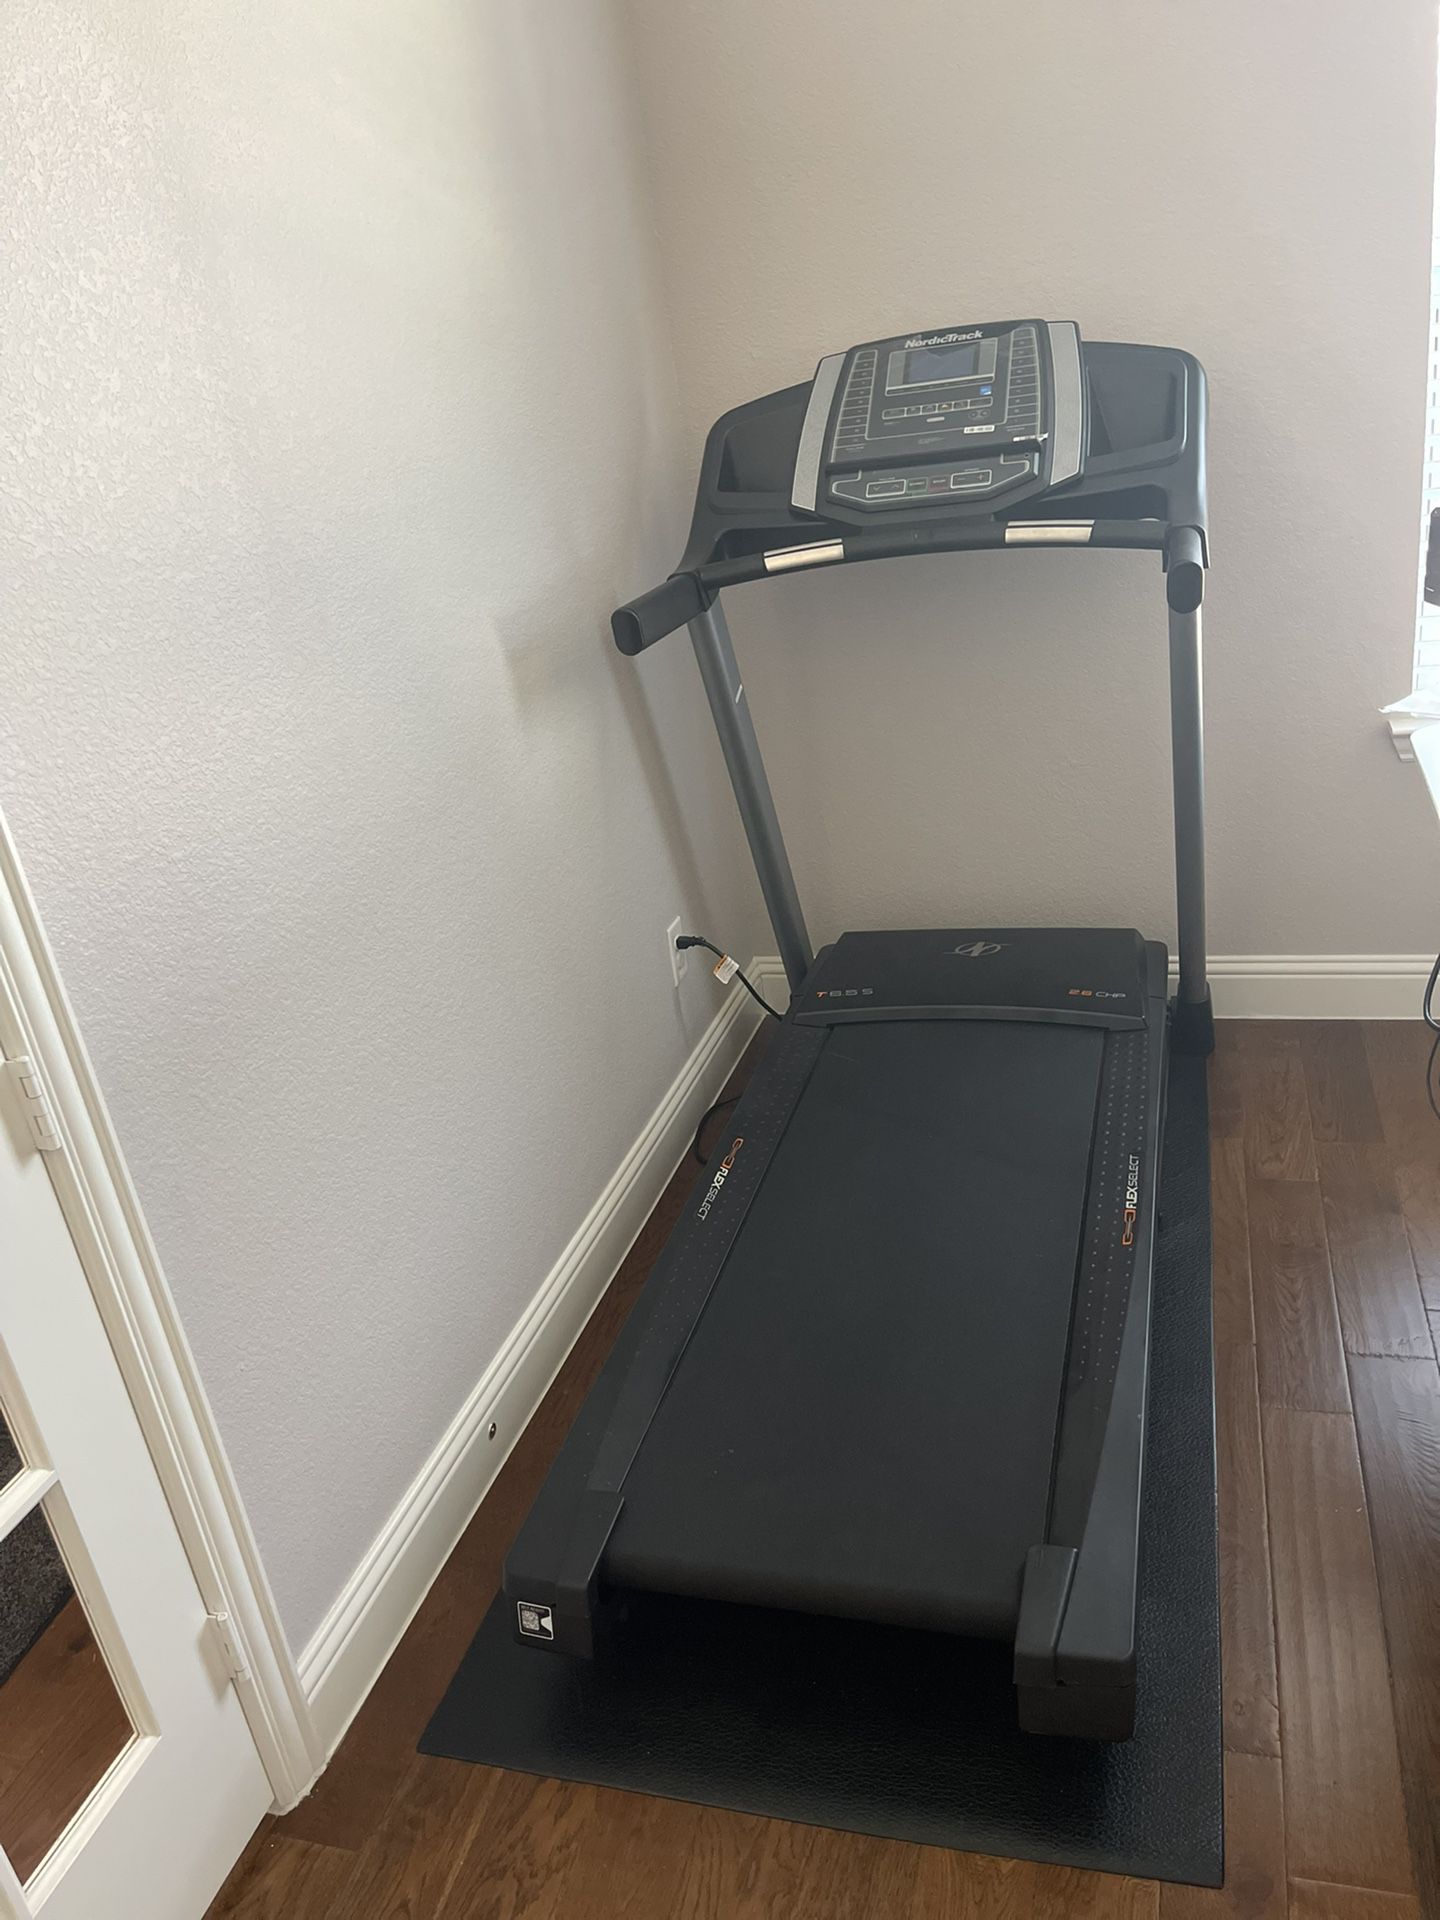 NordicTrack T Series: Treadmill